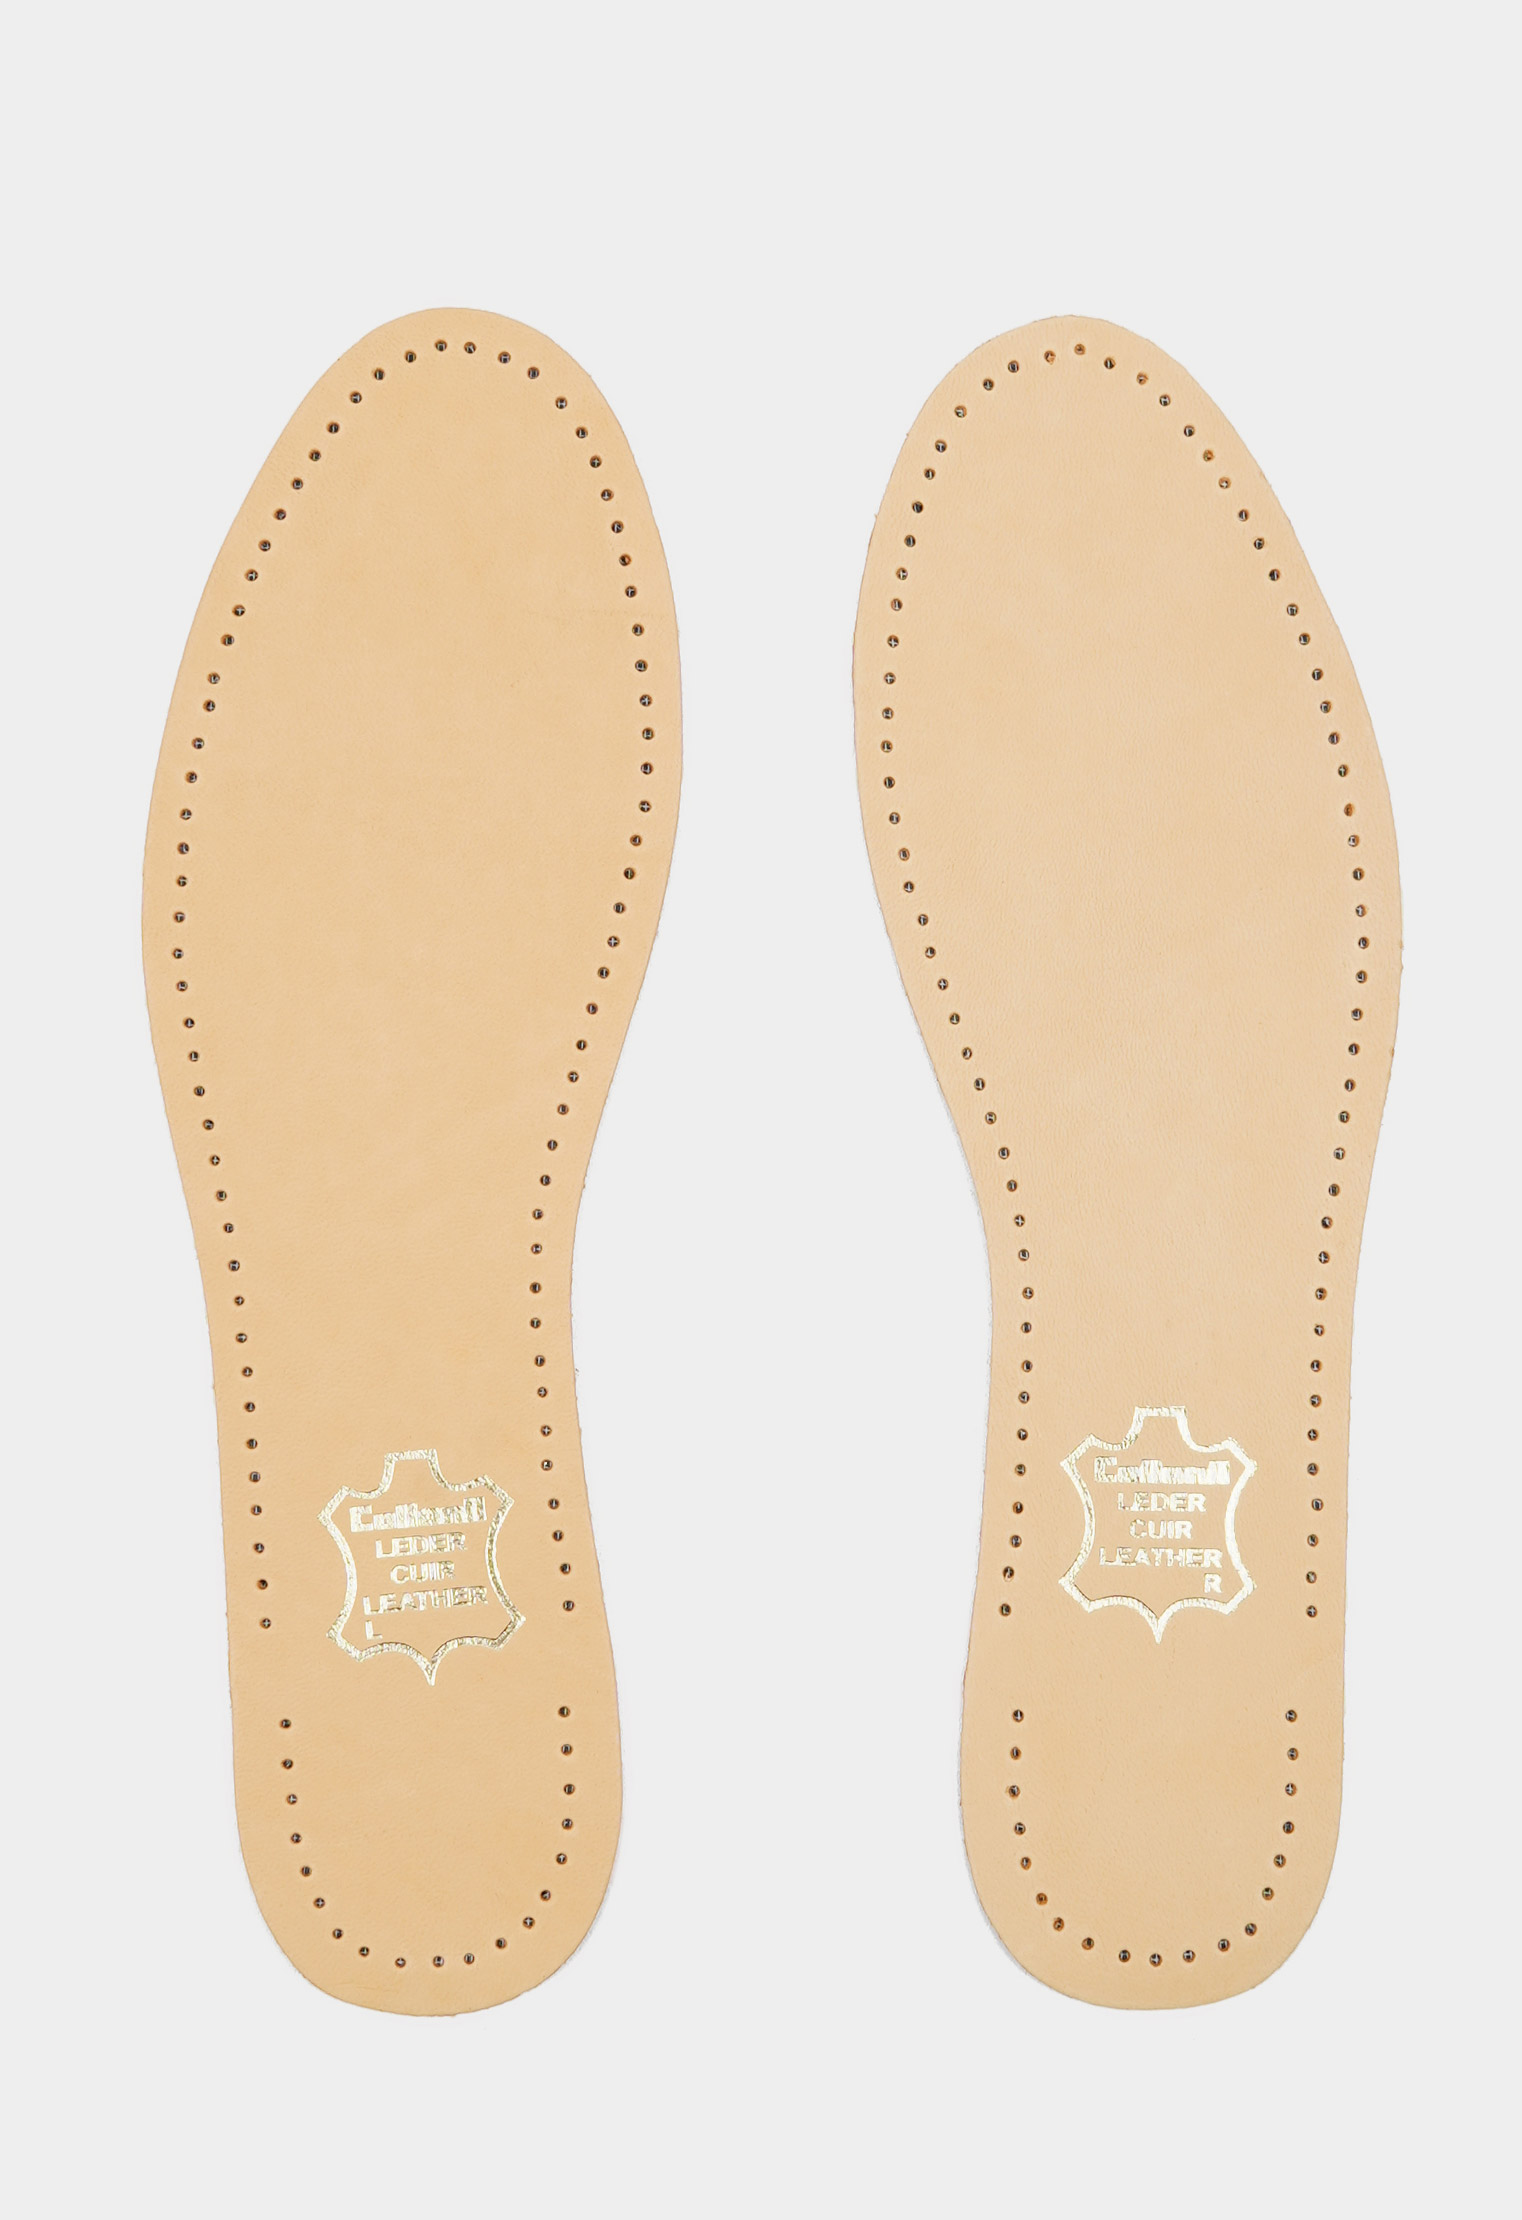 Уход за обувью 20-1641 Стельки Luxor /р.40/ (Размер: 40) стельки для обуви collonil luxor размер 40